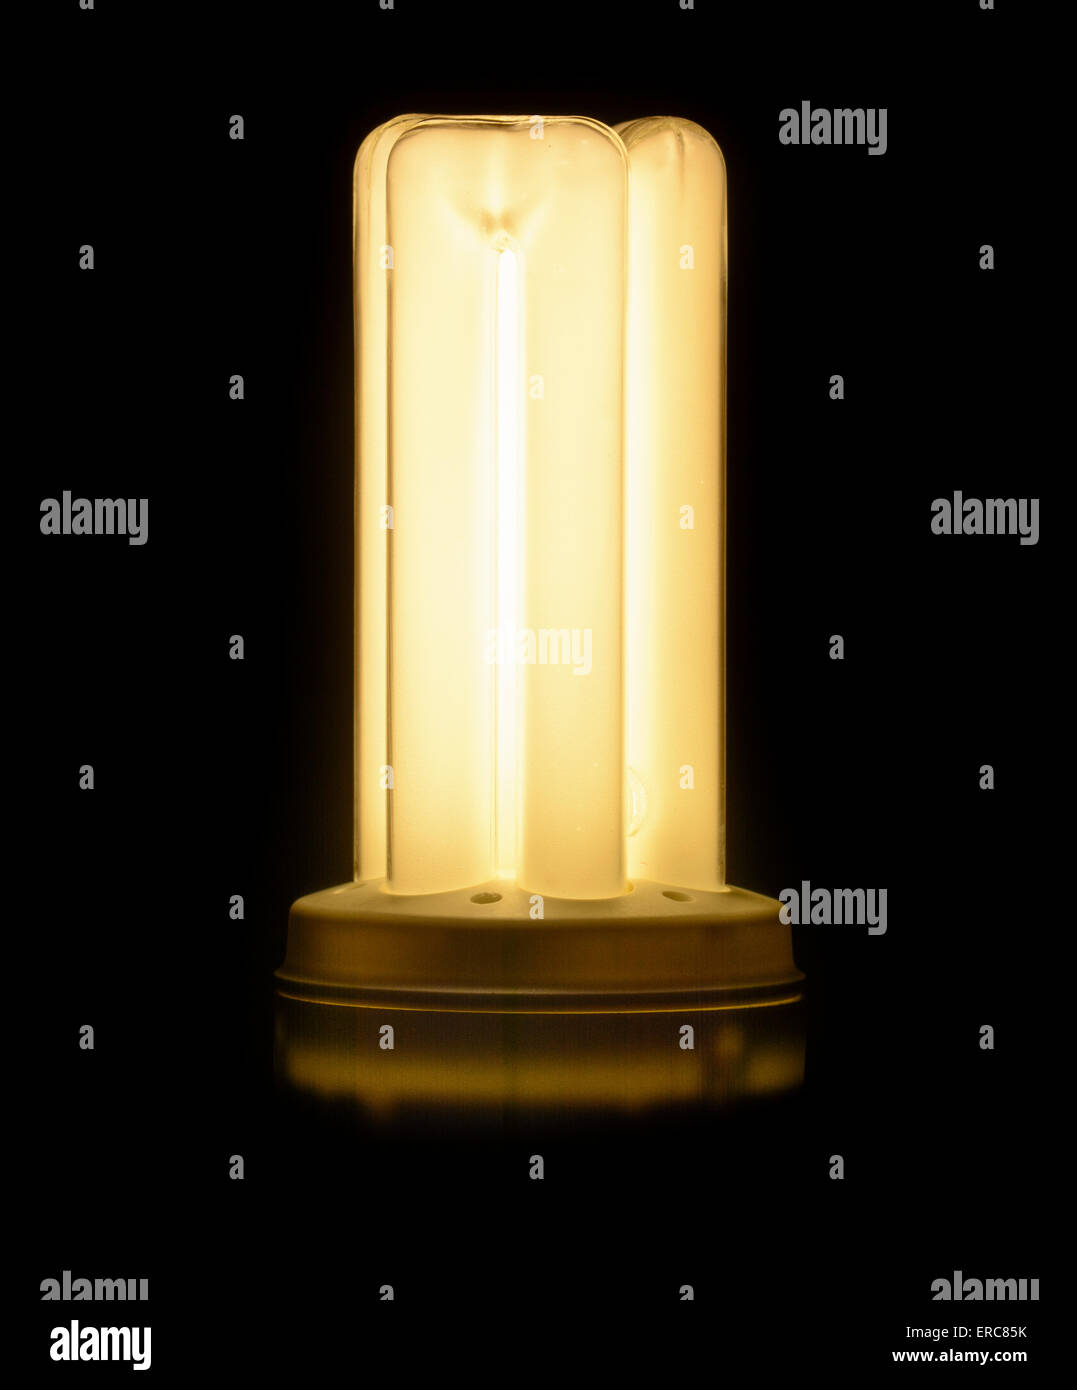 Bajo consumo bombilla fluorescente compacta (CFL) - La bombilla encendida. Foto de stock